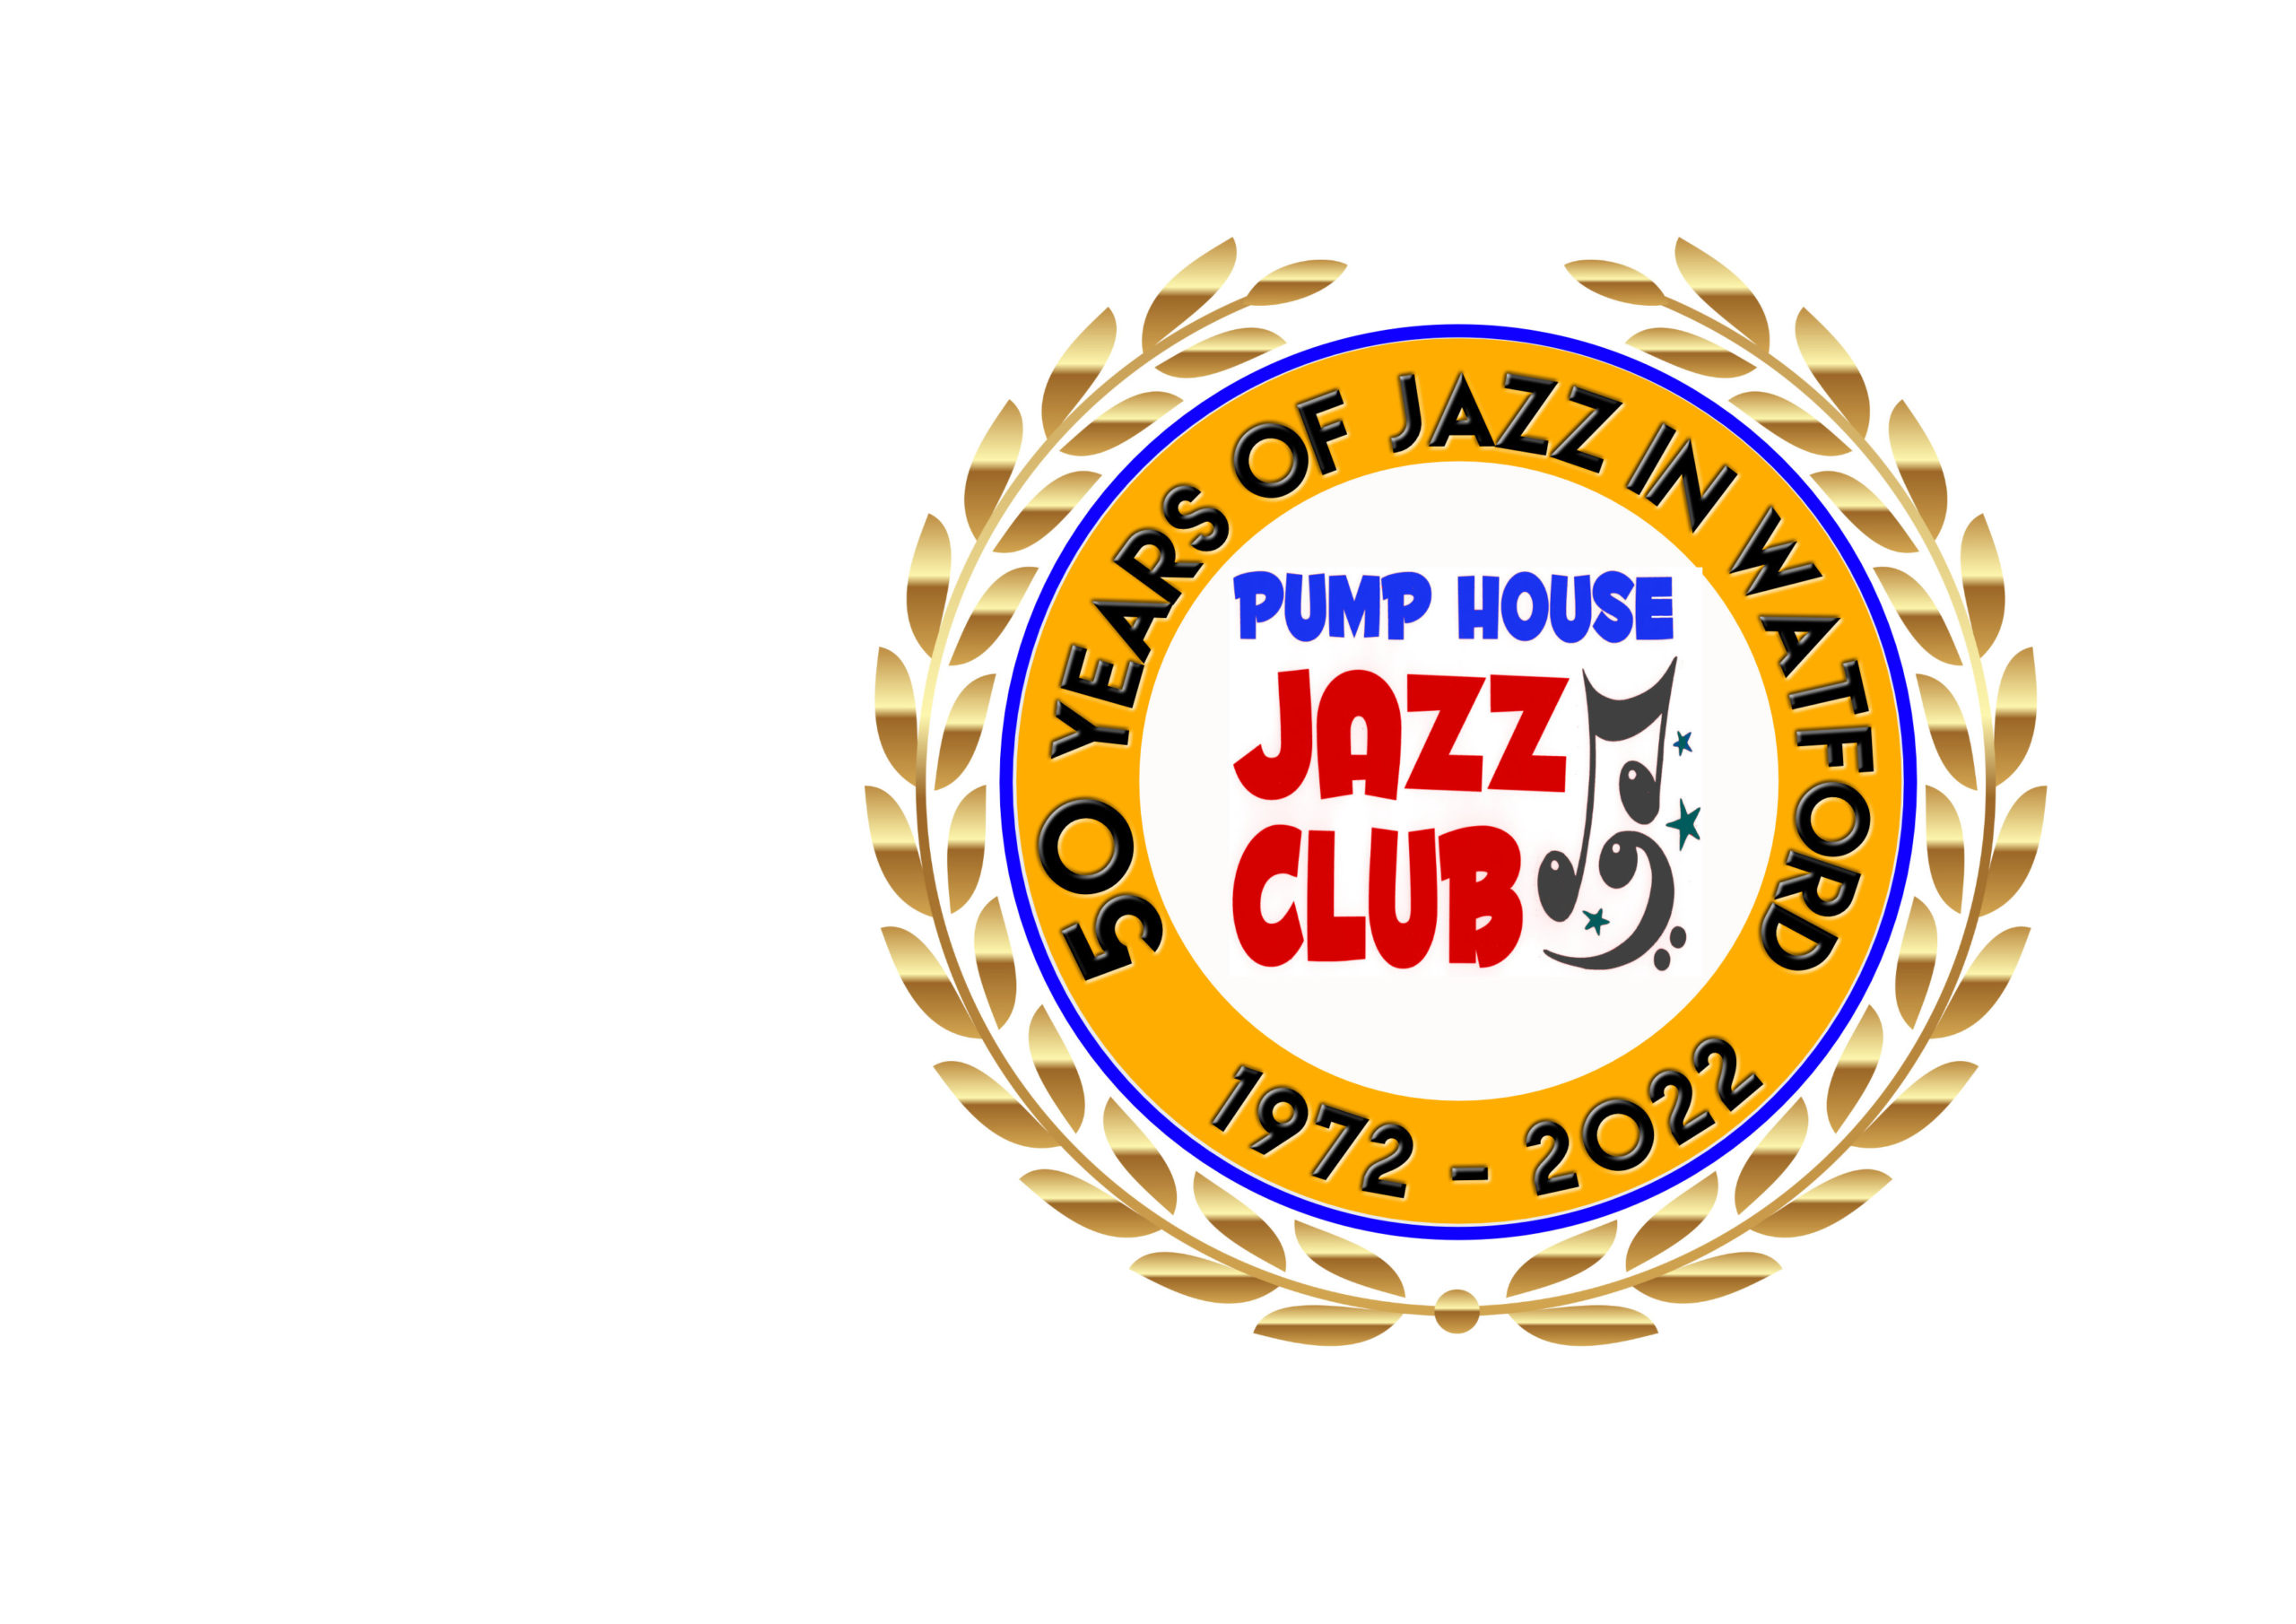 “Launching the Jazz Club’s season”